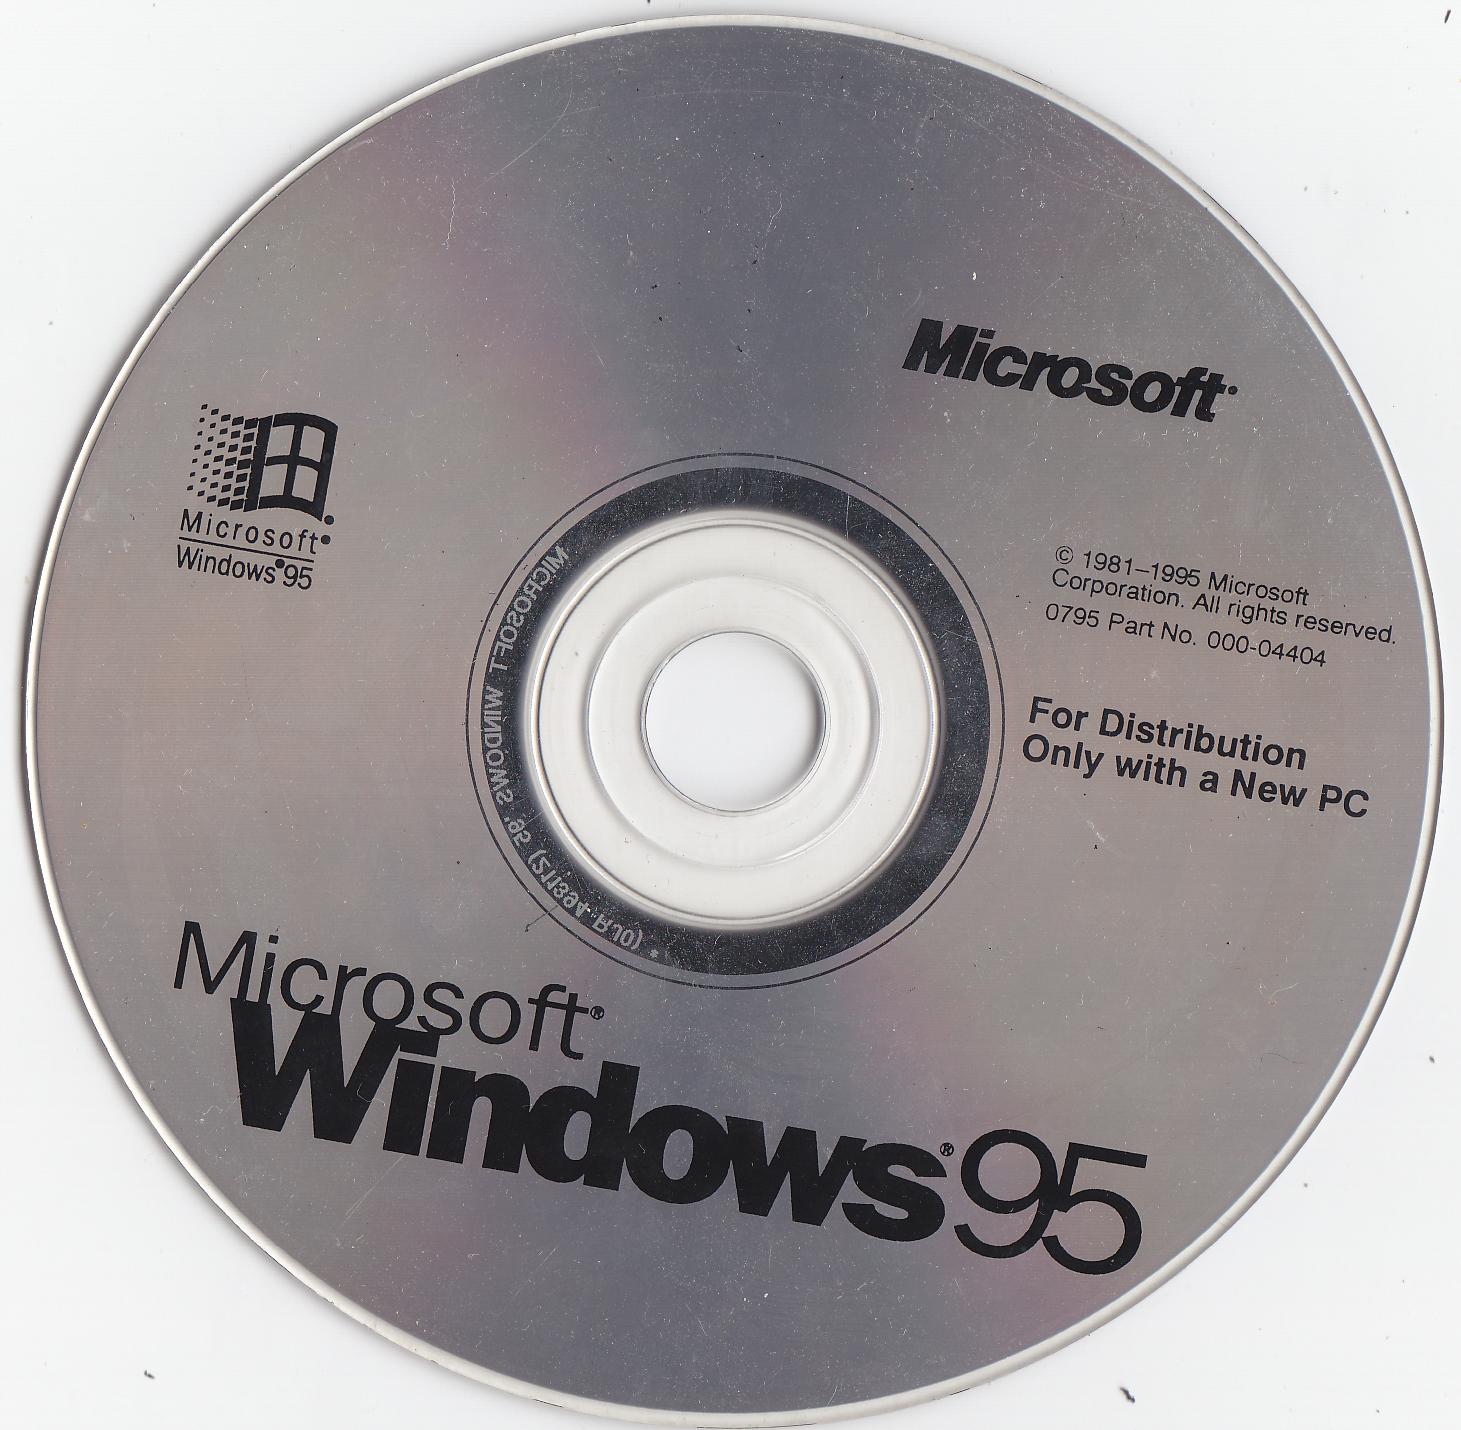 C cd y y. Windows 95 CD. Виндовс 95 диск. Windows 95 osr2. Надпись на CD диске.